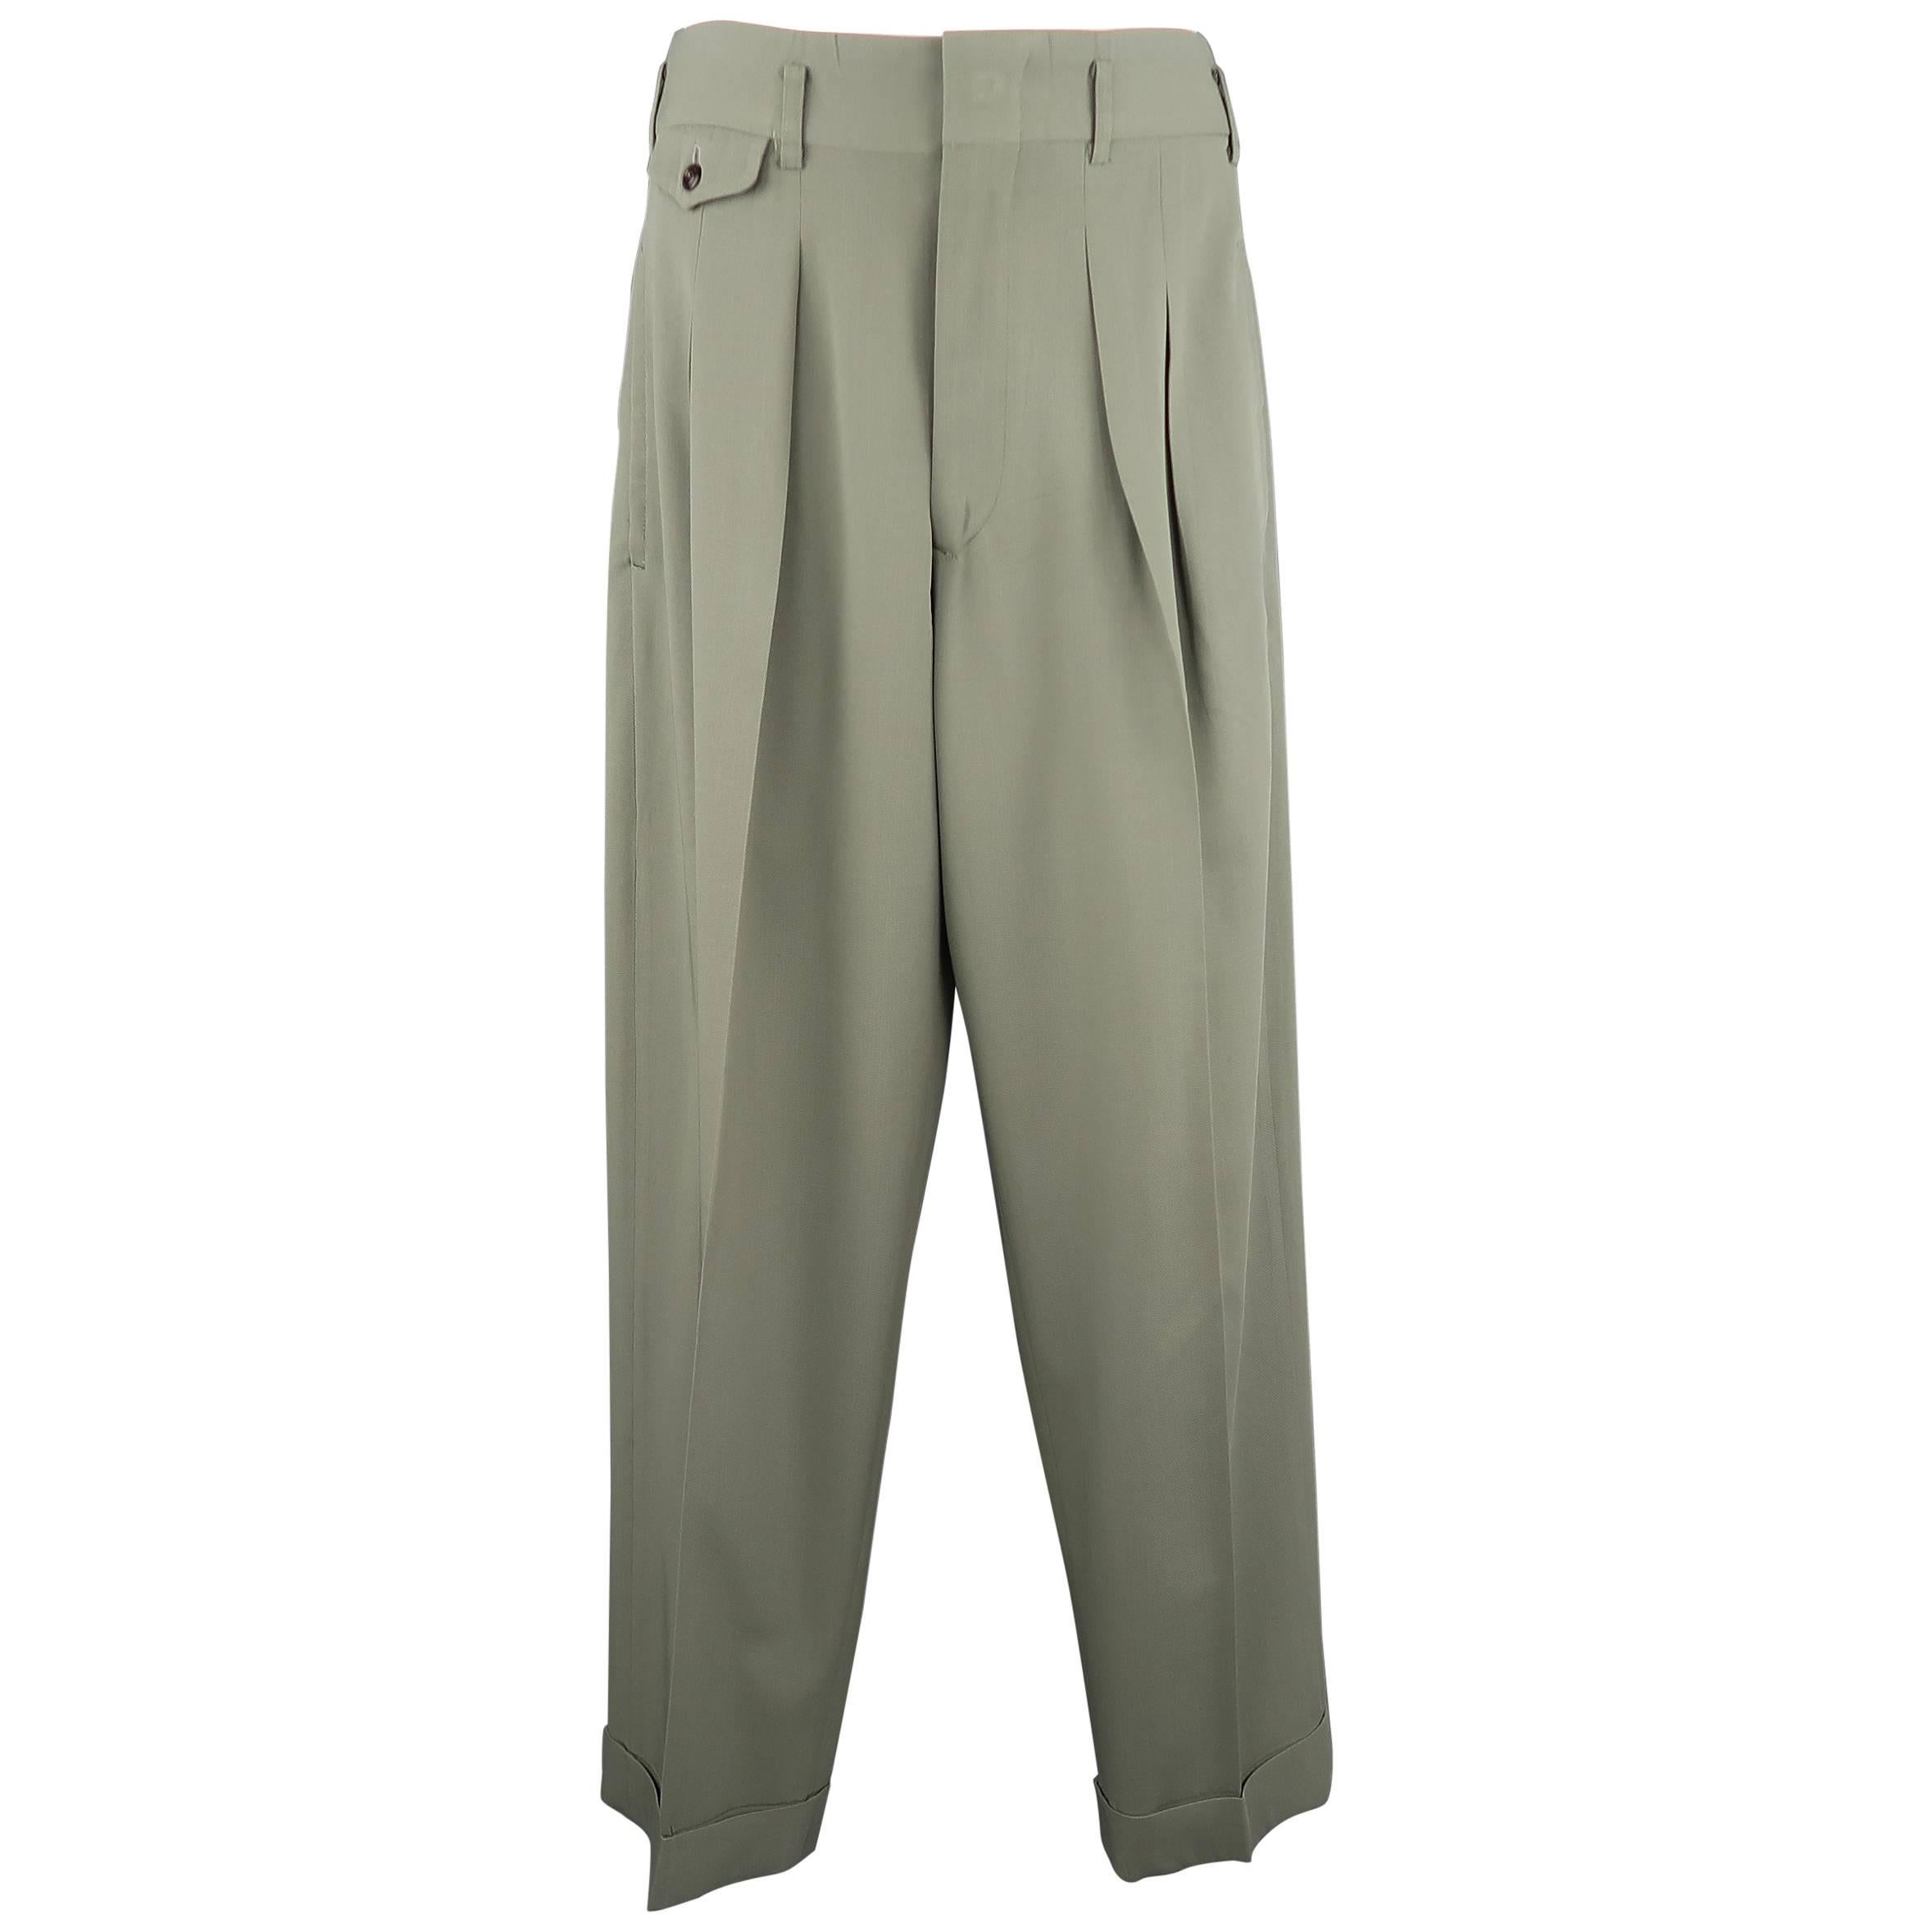 Men's MATSUDA Size 33 Sage Green Wool Pleated Dress Pants